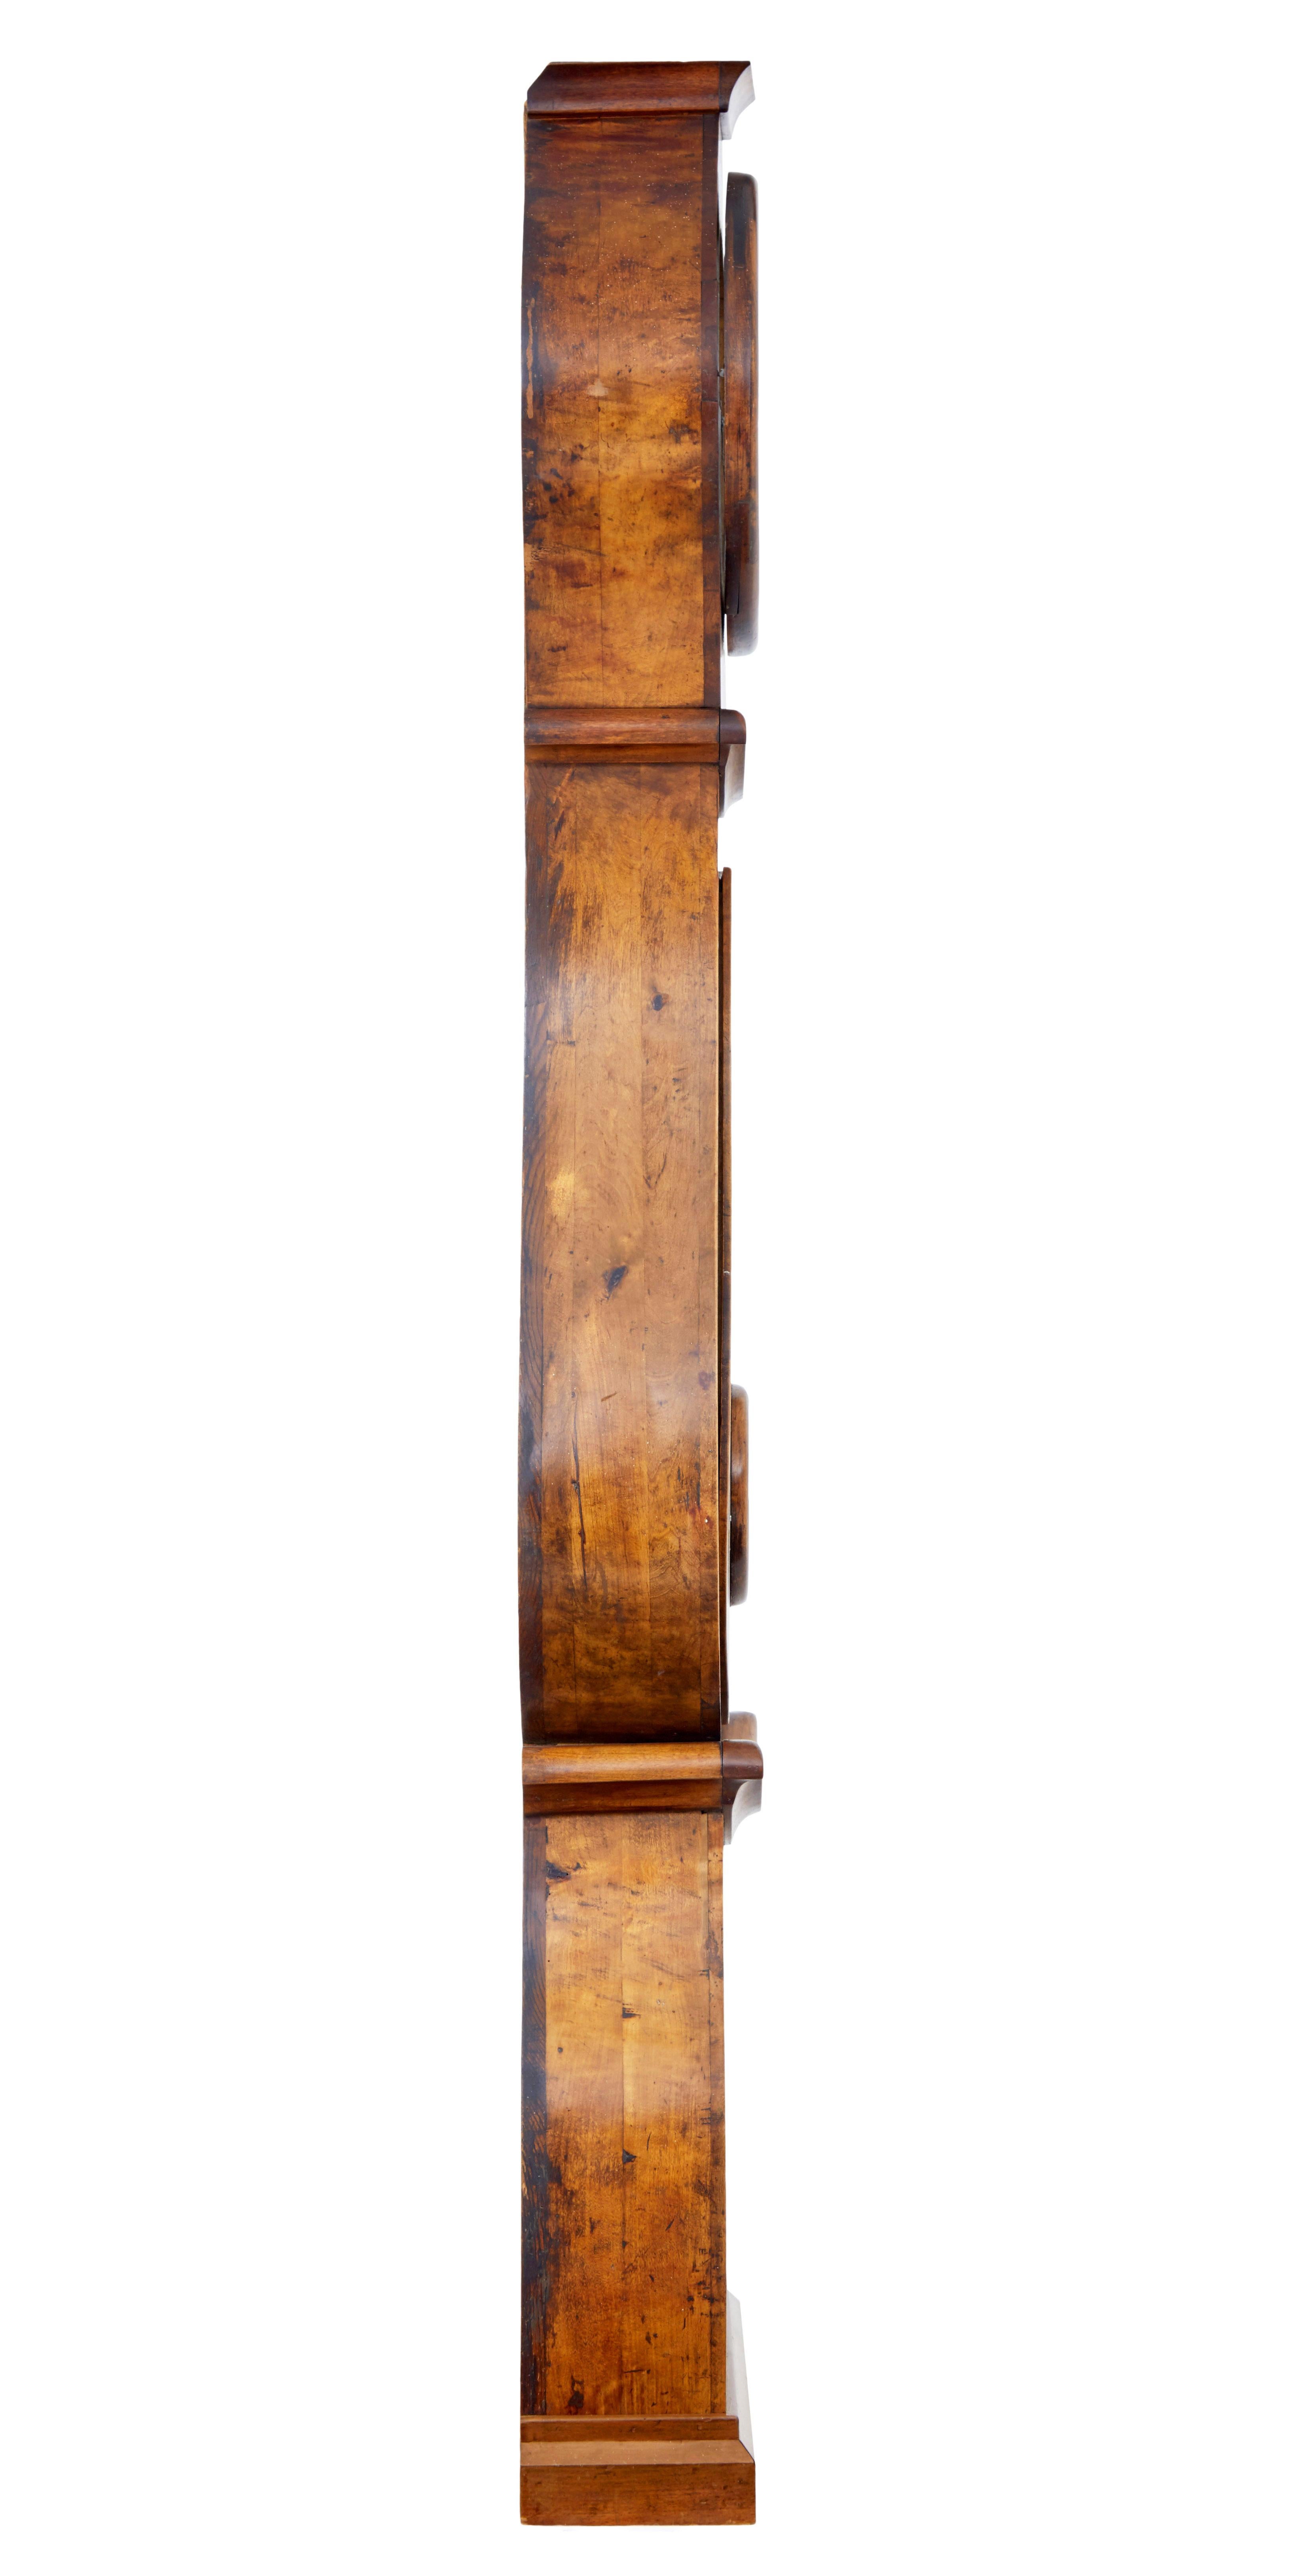 Hand-Carved 19th century Swedish birch mora clock For Sale